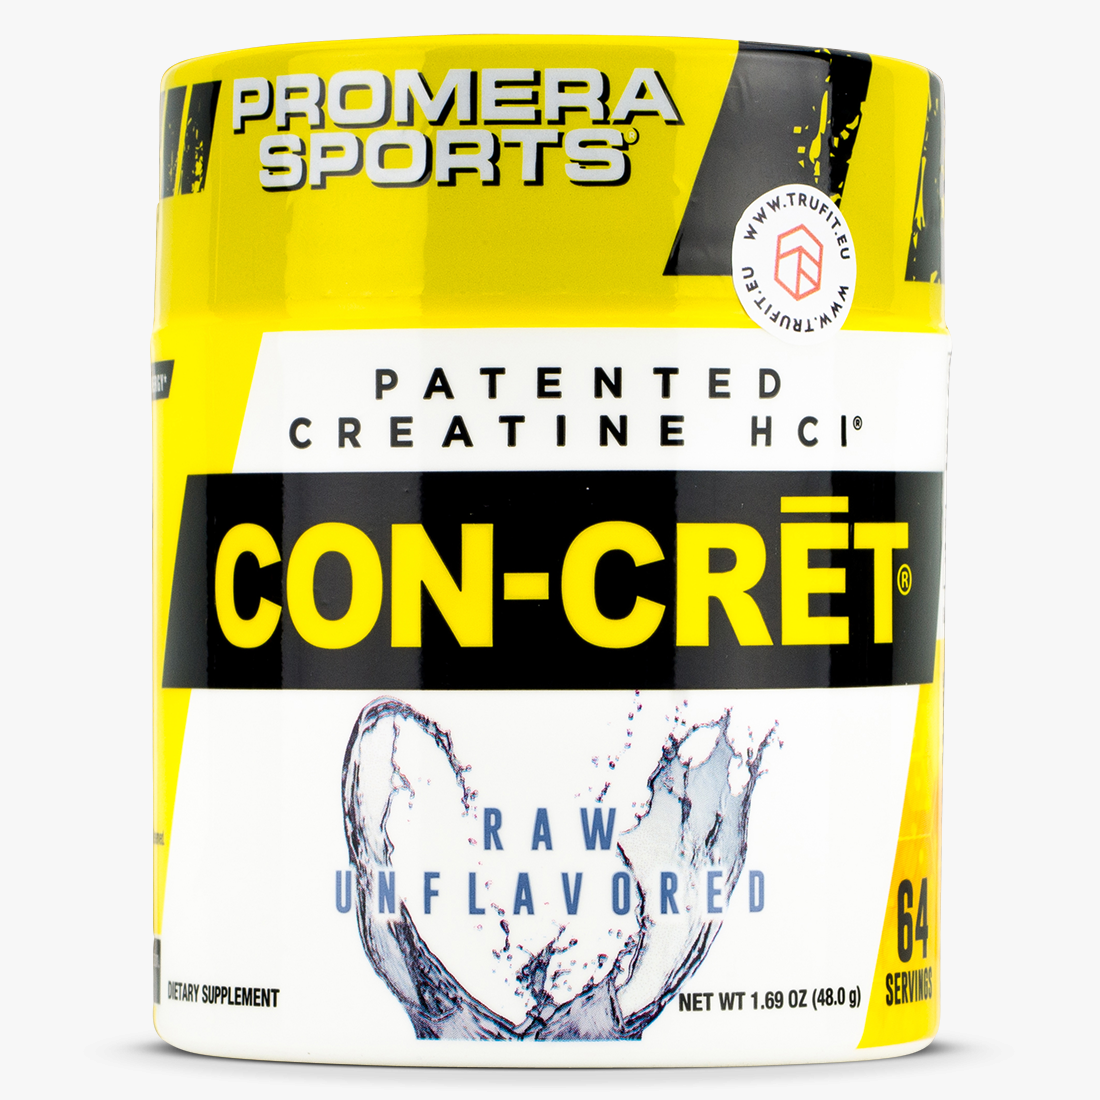 Promera Sports Con-Cret Creatine HCL Micro Dosing Concret 64 servings 